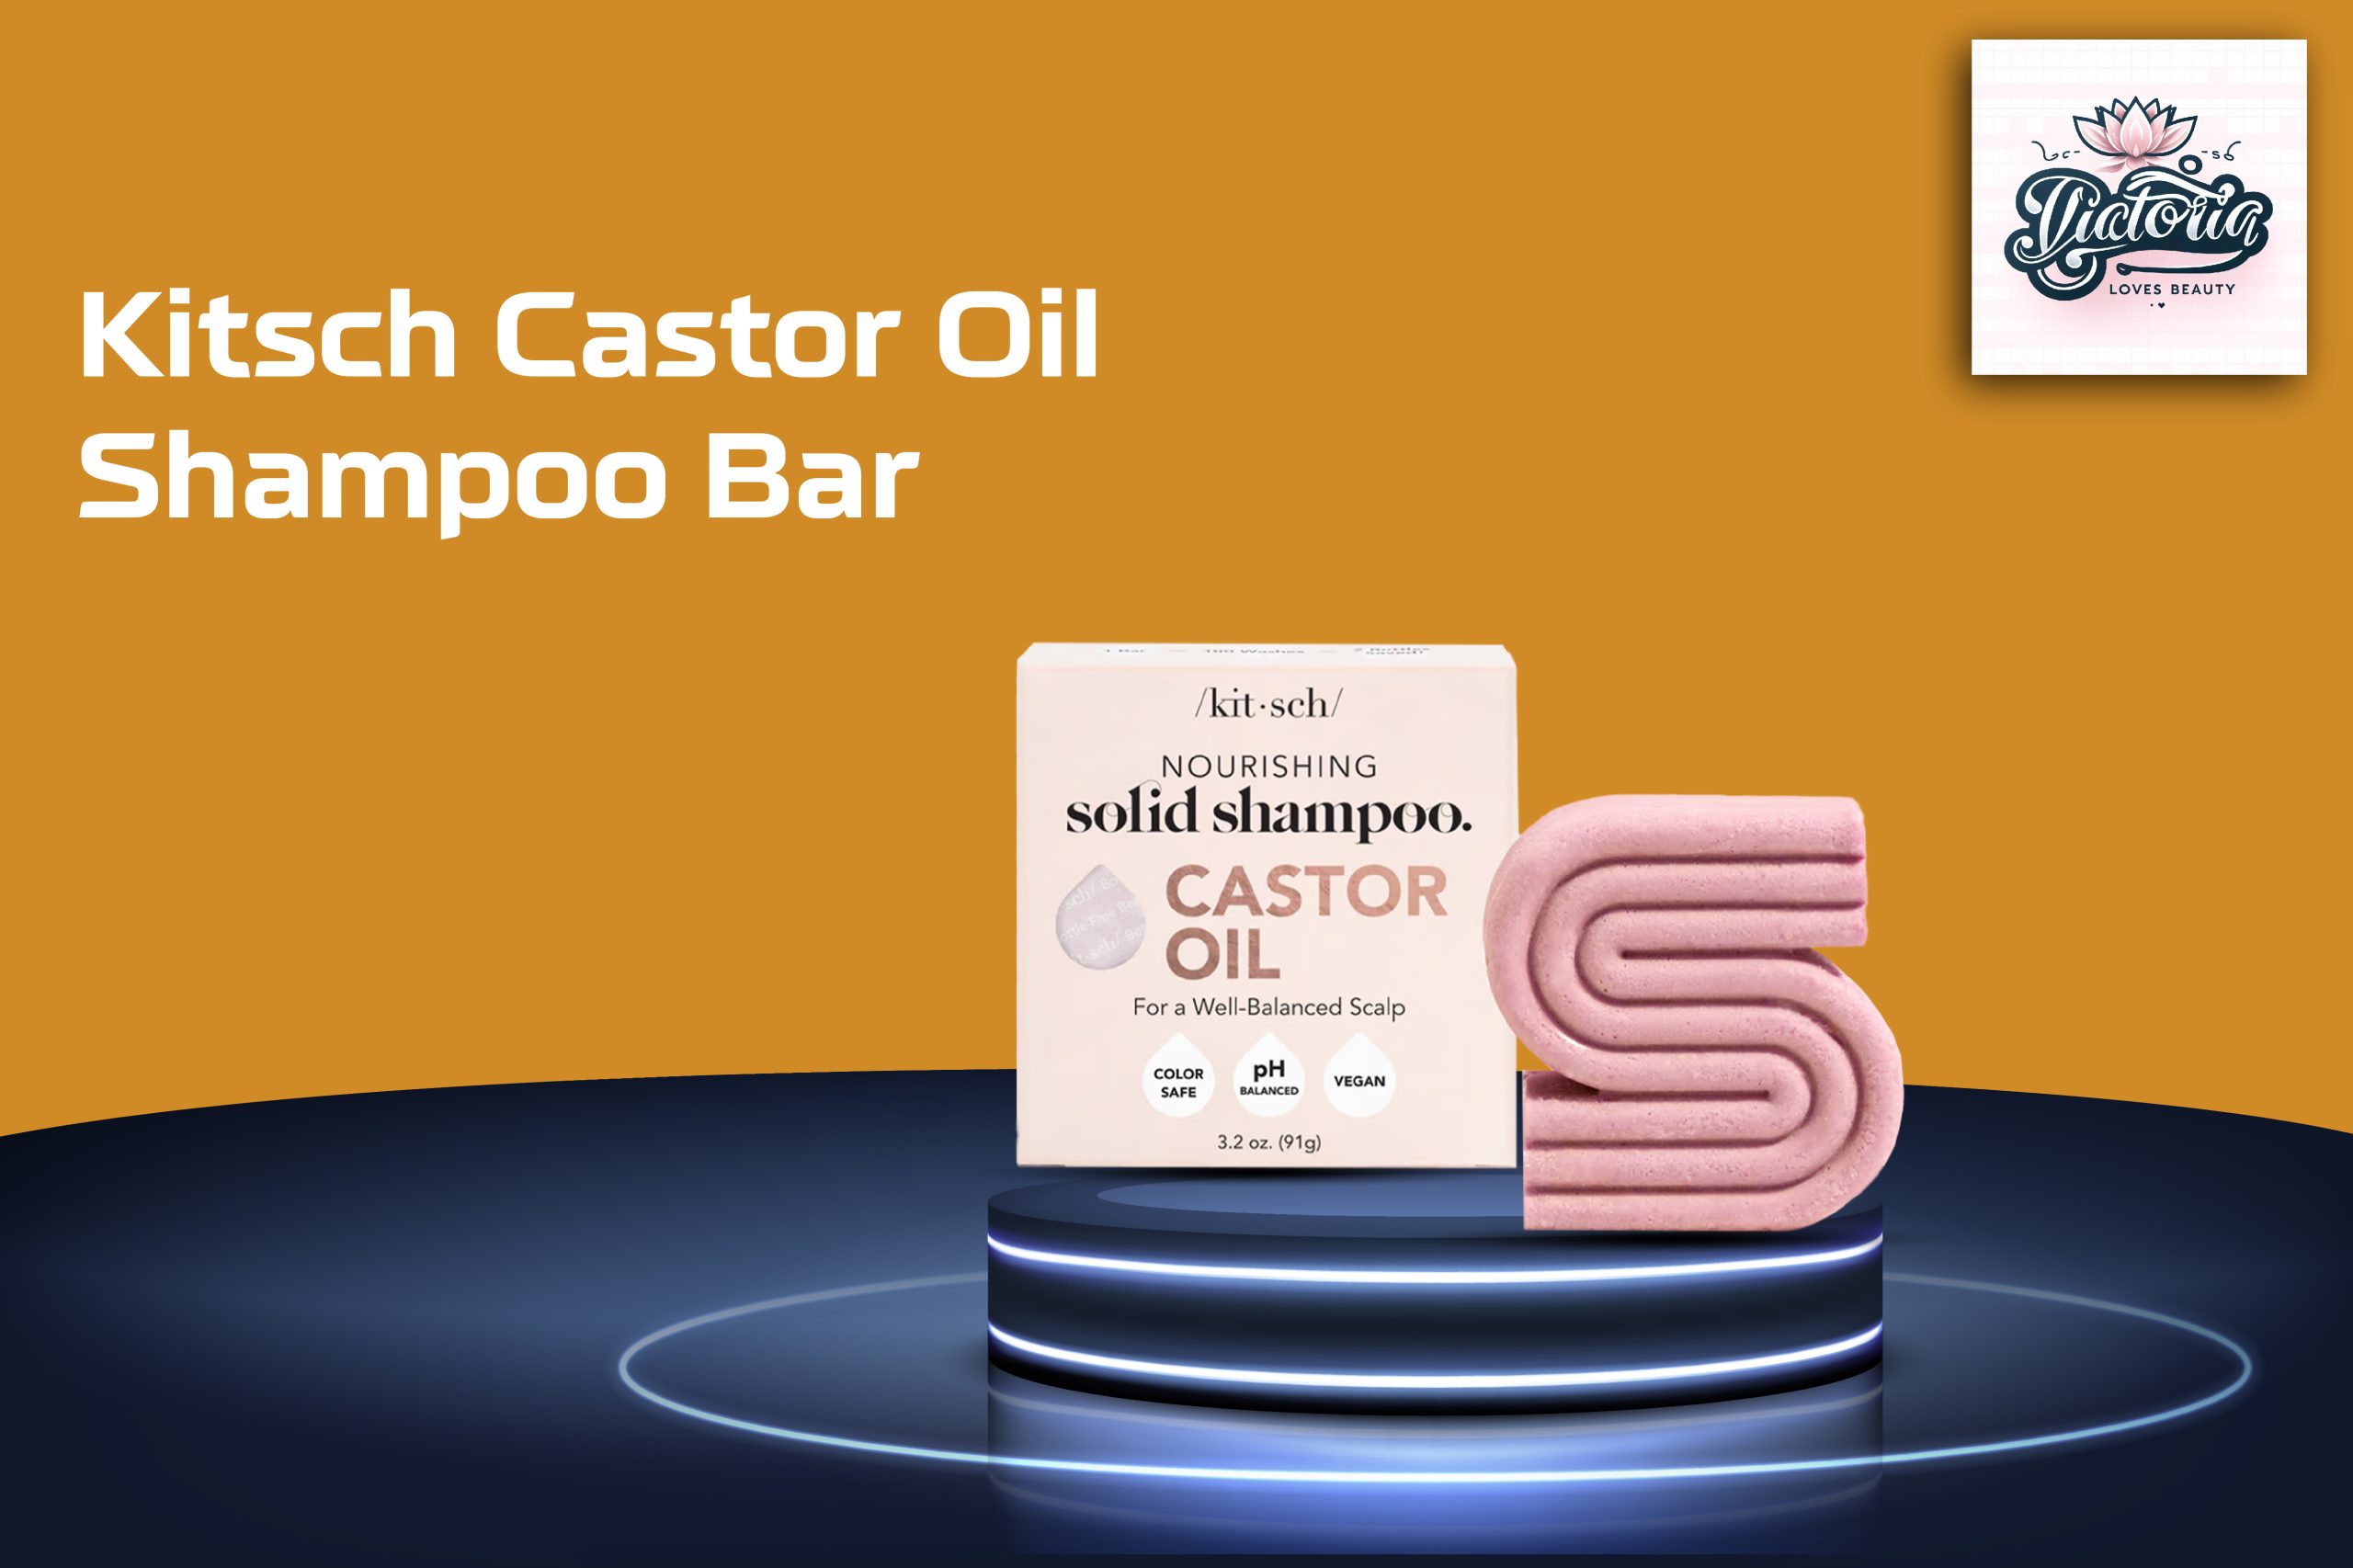 Kitsch Castor Oil Shampoo Bar Review